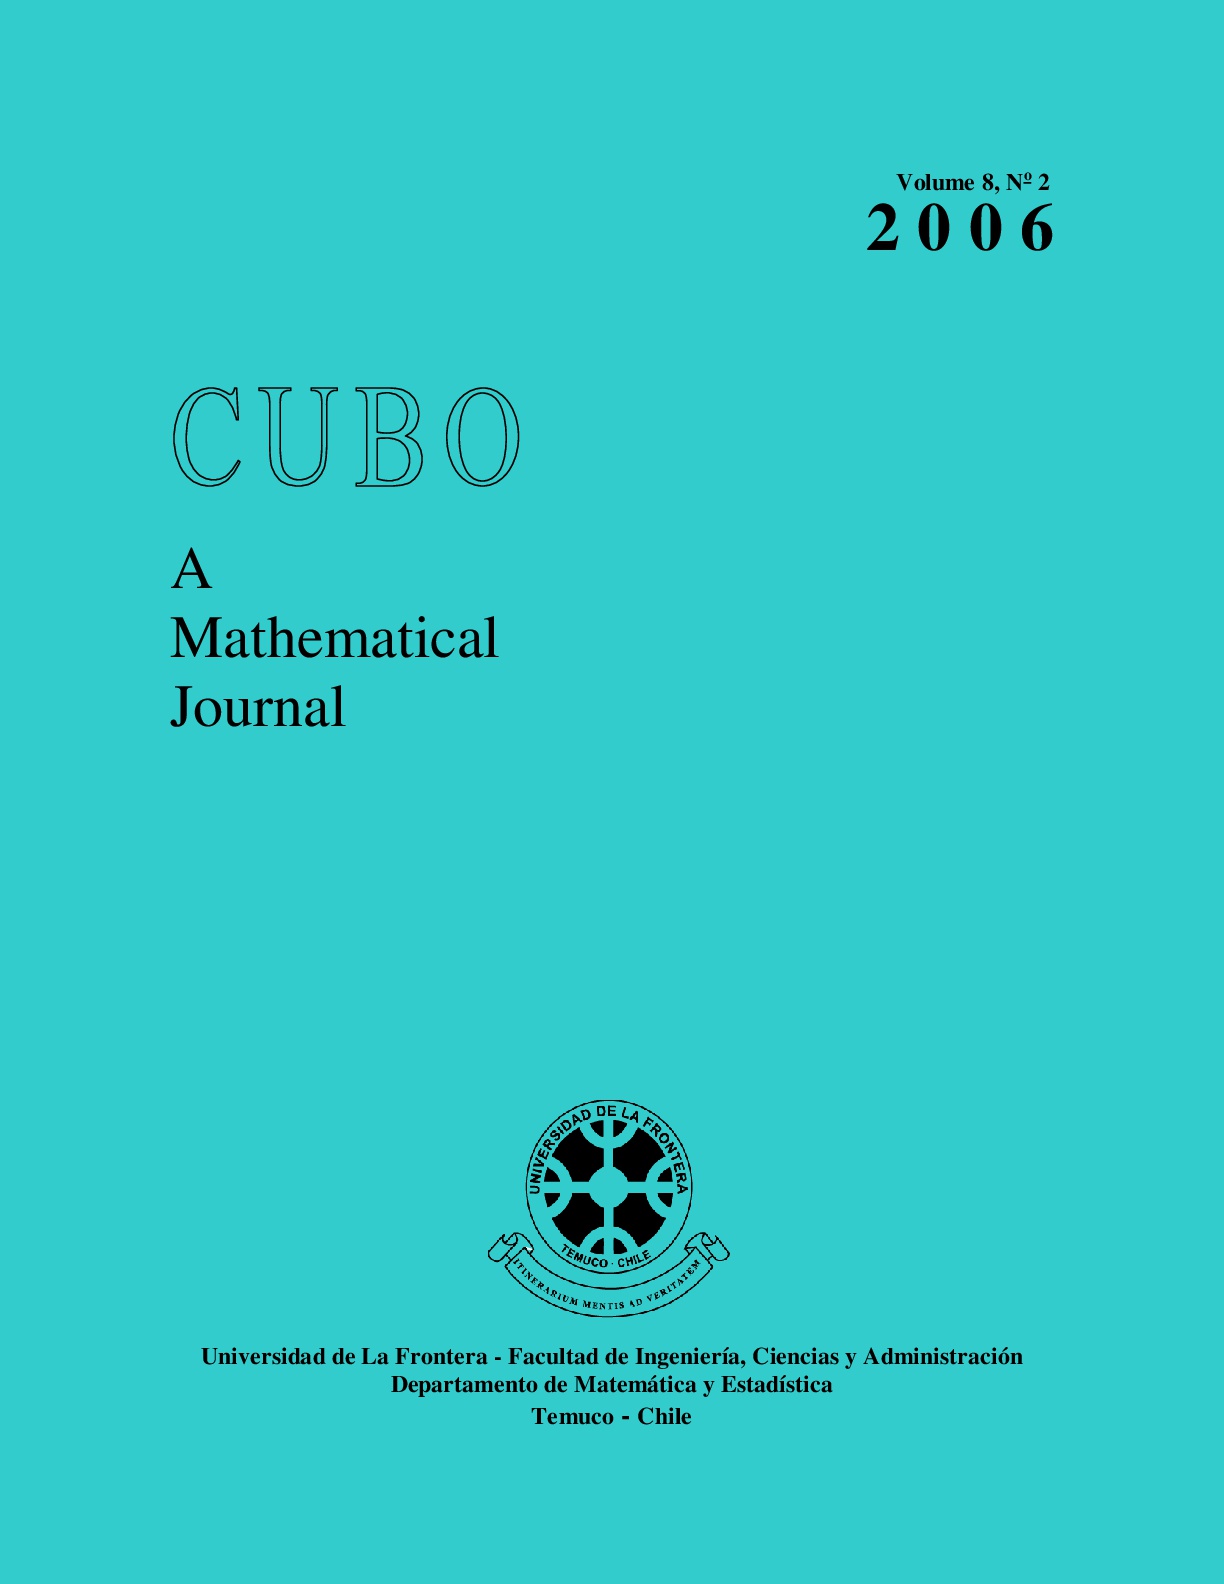 					View Vol. 8 No. 2 (2006): CUBO, A Mathematical Journal
				